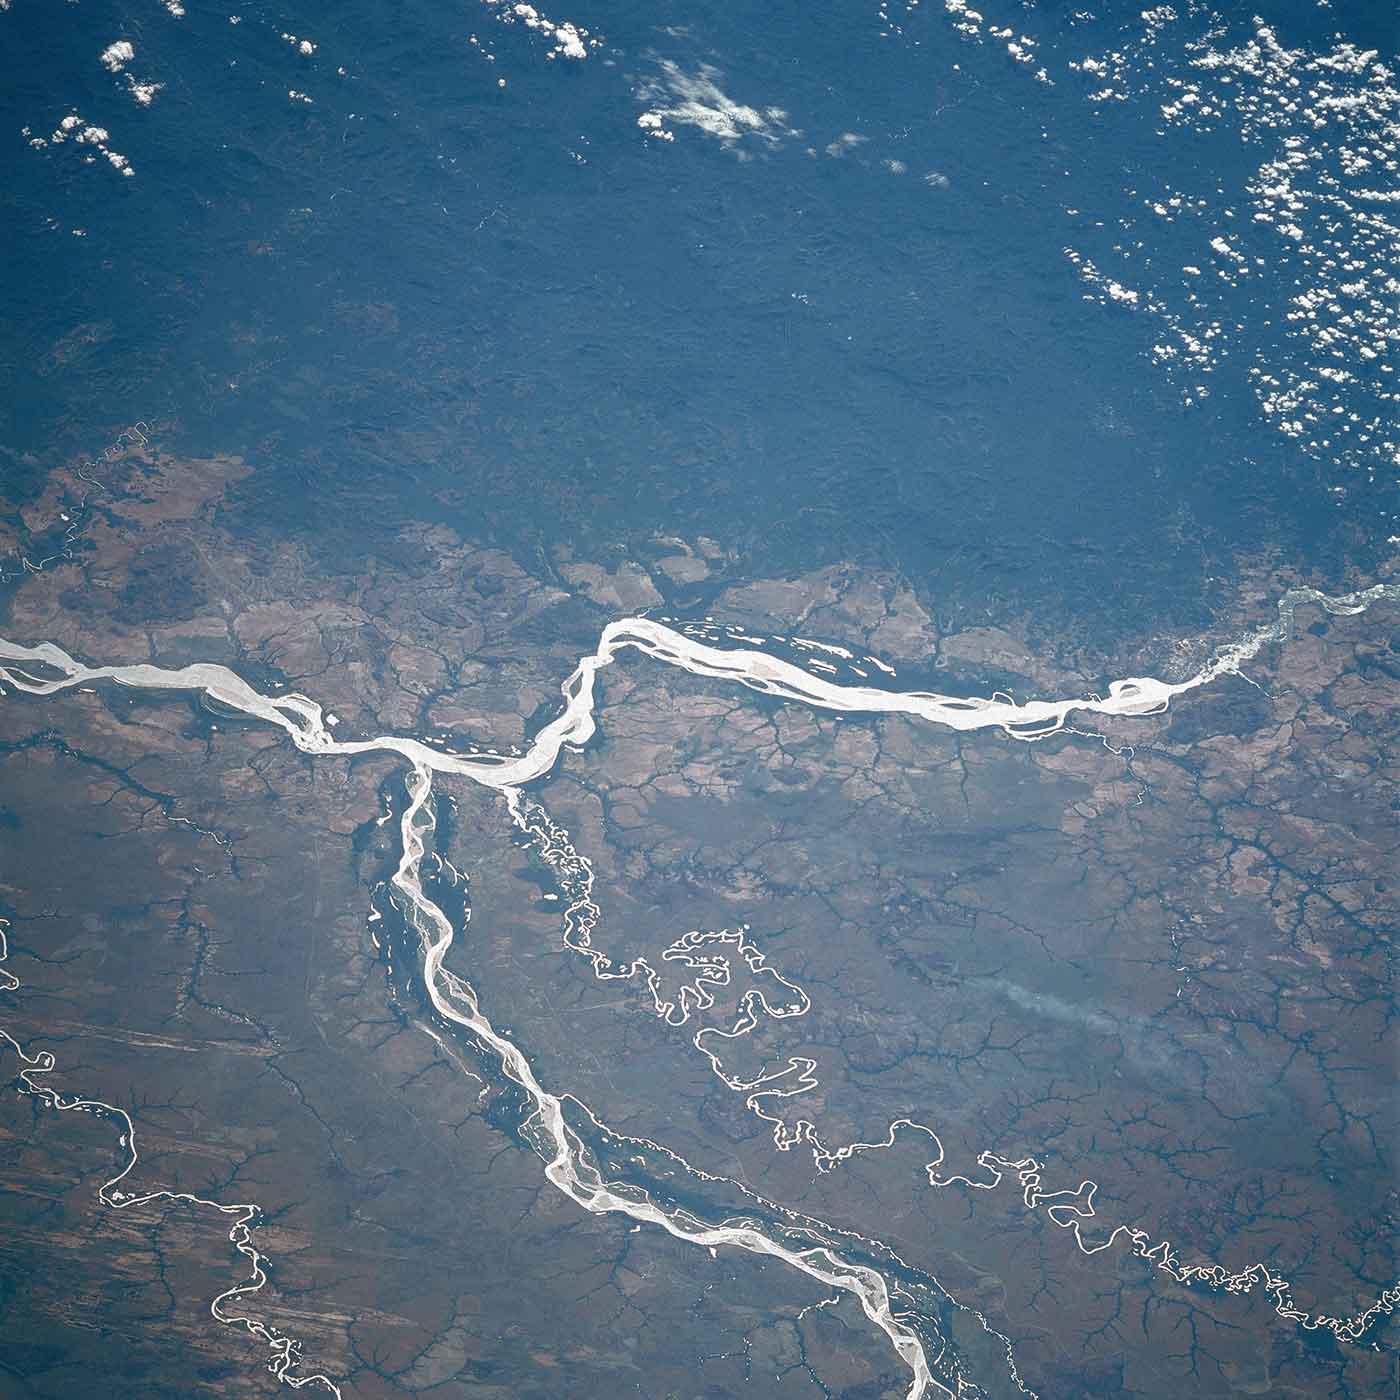 Orinoco, Meta Rivers, Colombia and Venezuela January 1986, by NASA